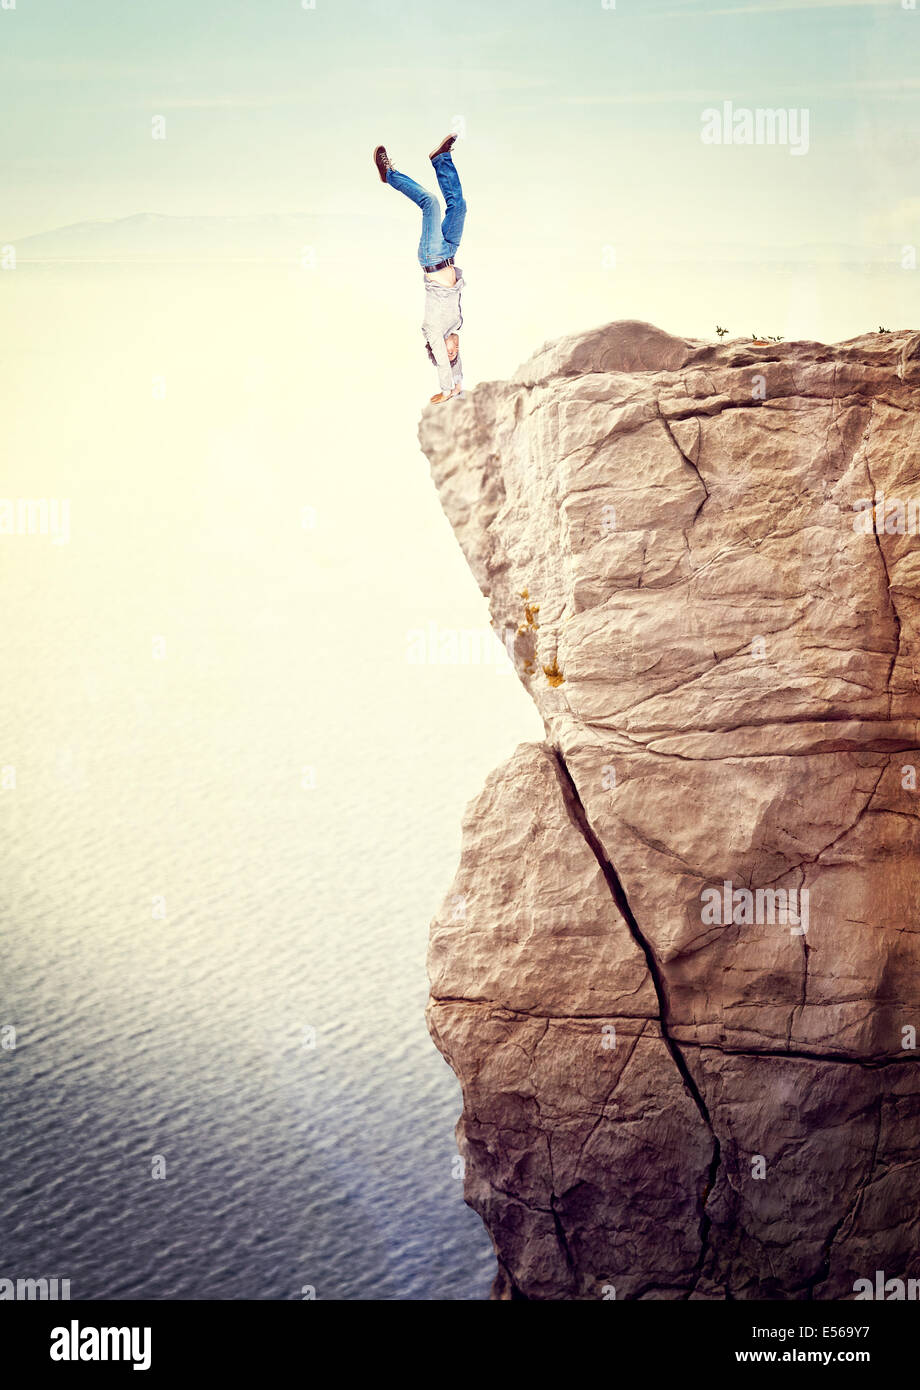 man acrobat on dangerous cliff Stock Photo